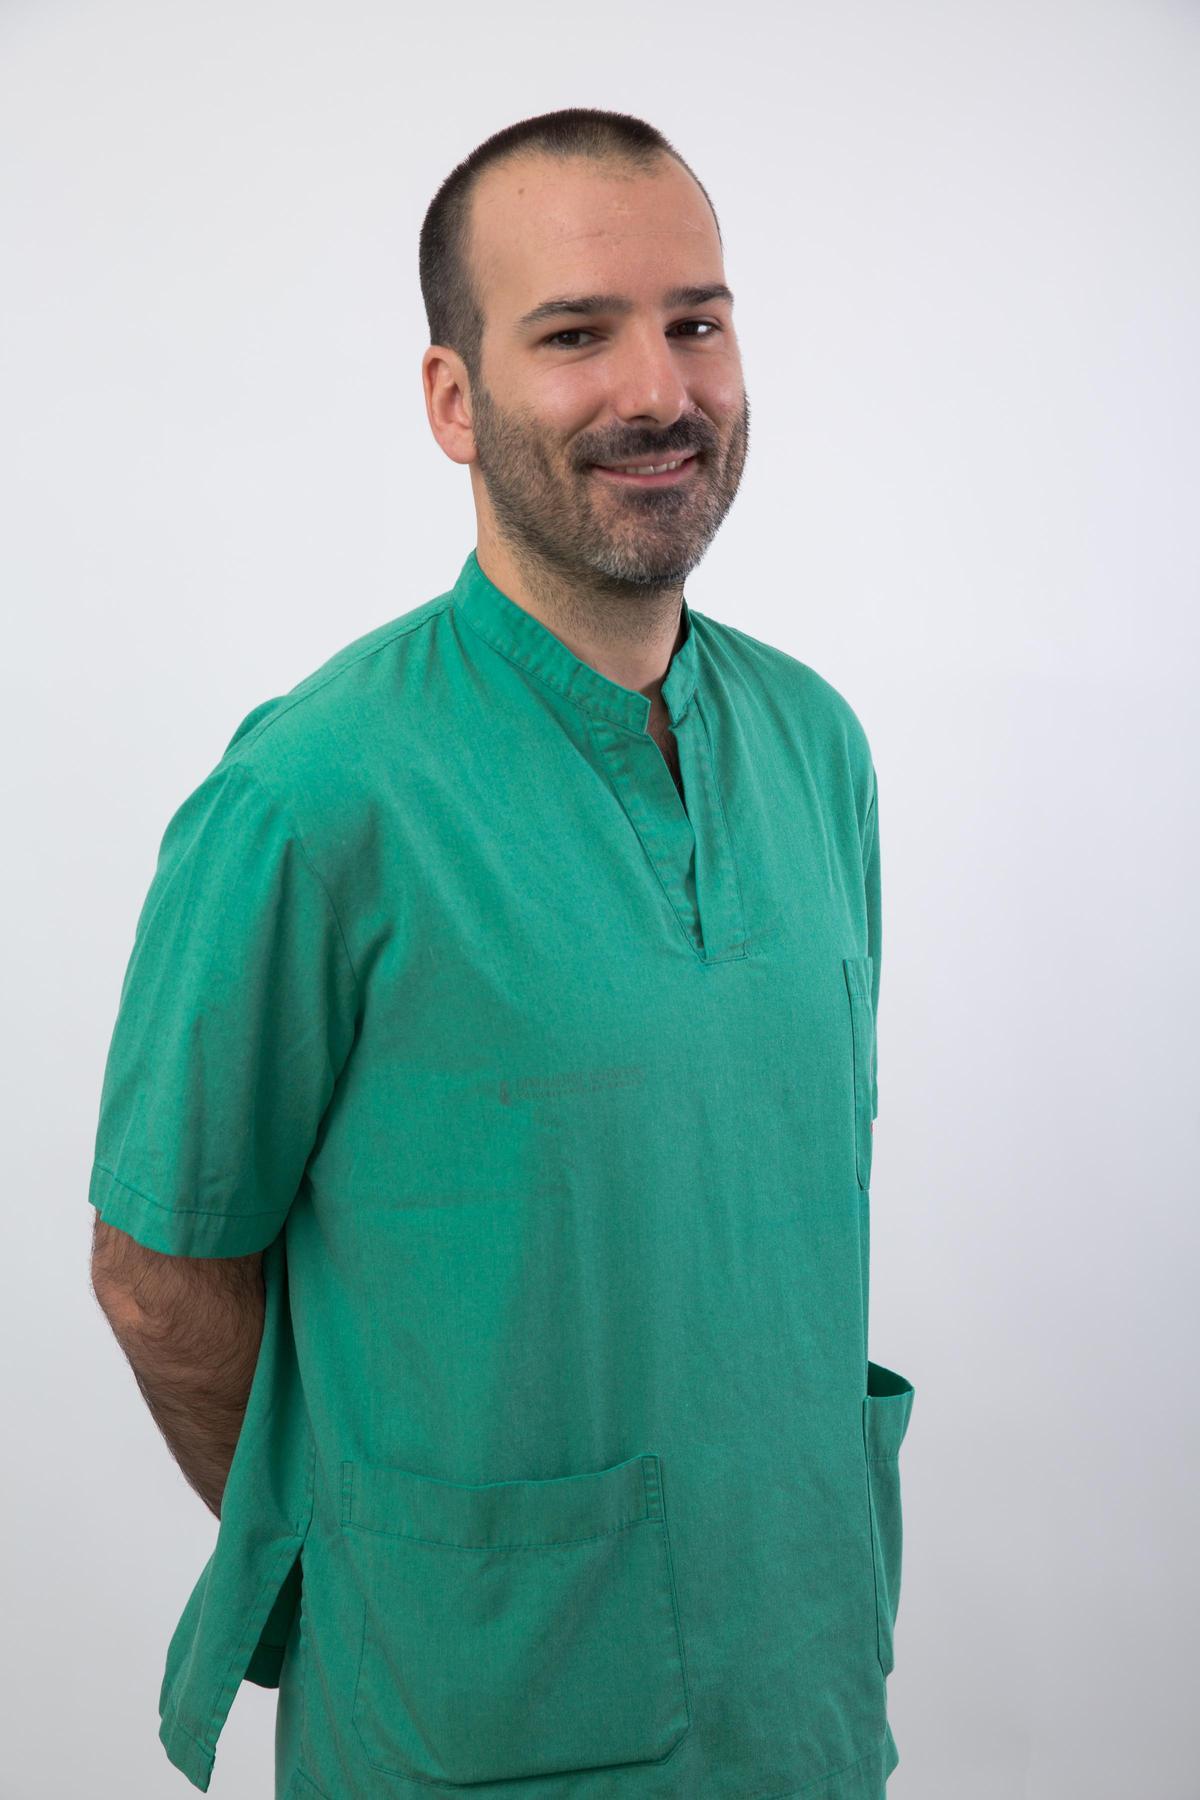 El doctor Luis González, del Hospital del Vinalopó, responsable de la nueva técnica